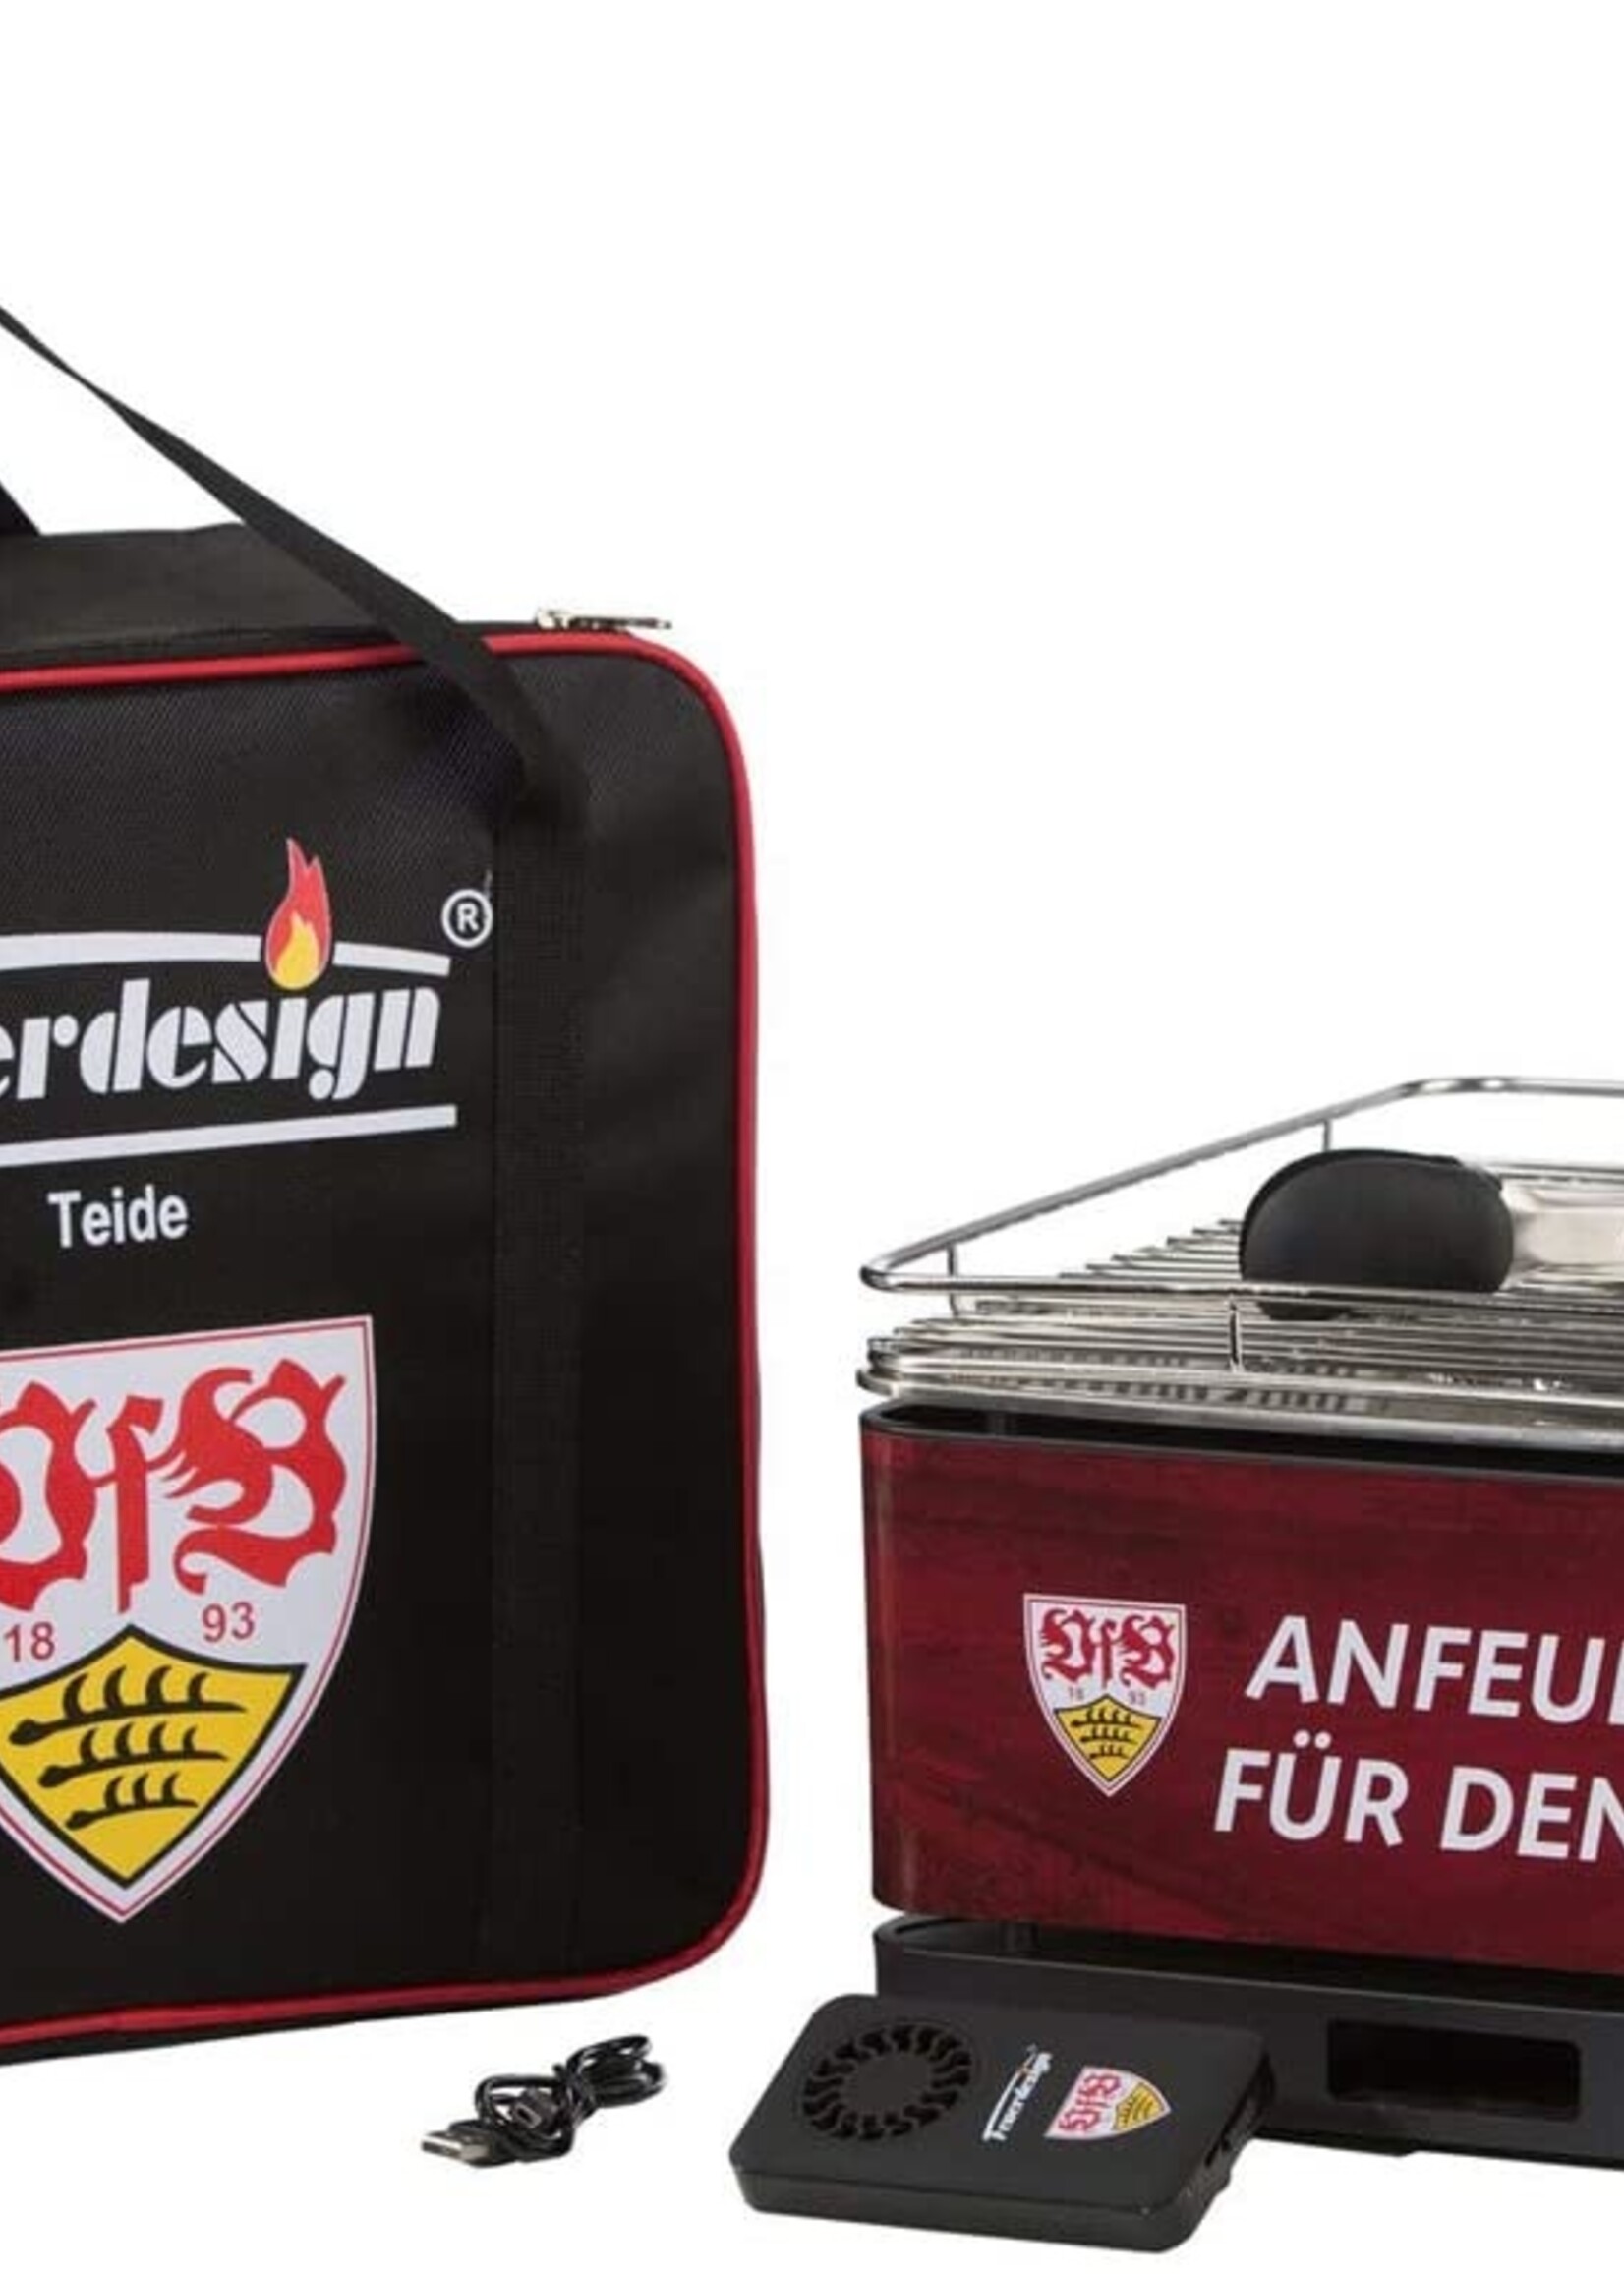 Feuerdesign Teide VfB Stuttgart  - Tafelbarbecue